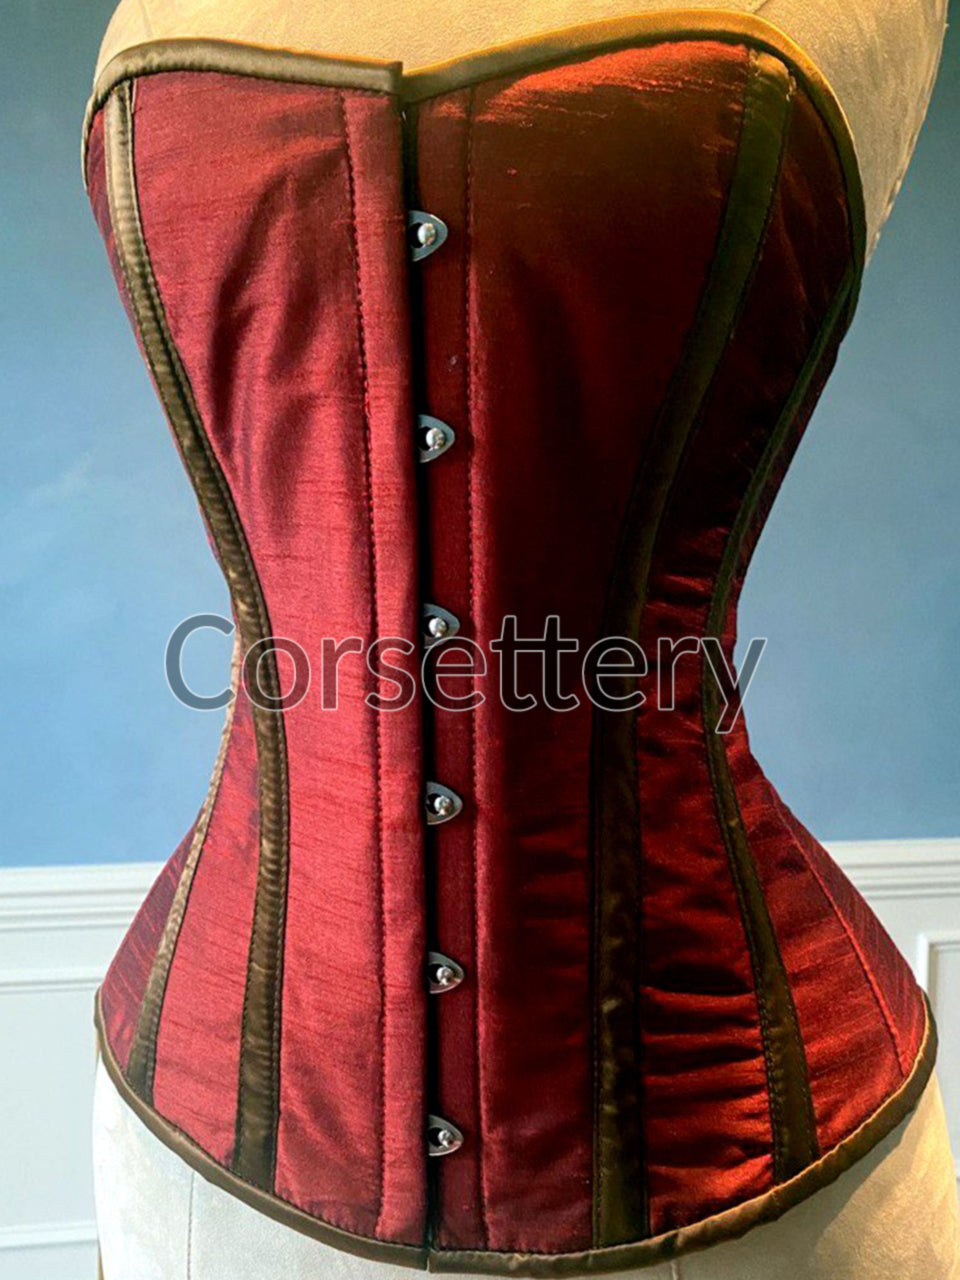 Classic taffeta corset red and black. Steel-boned corset for tight lacing.  Prom, gothic, steampunk Victorian corset.